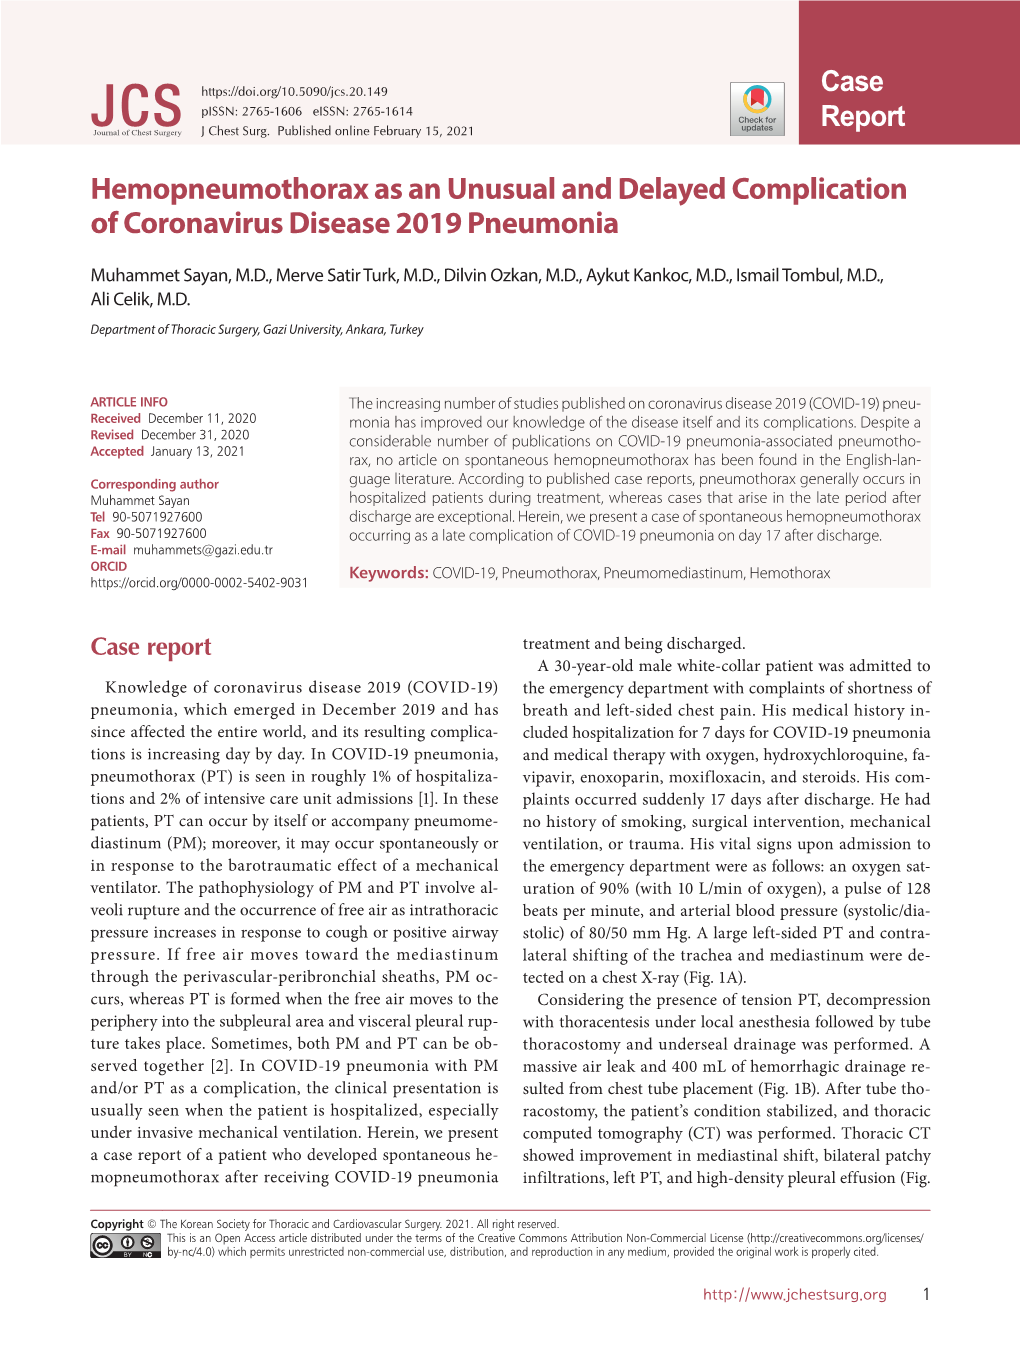 Hemopneumothorax As an Unusual and Delayed Complication of Coronavirus Disease 2019 Pneumonia